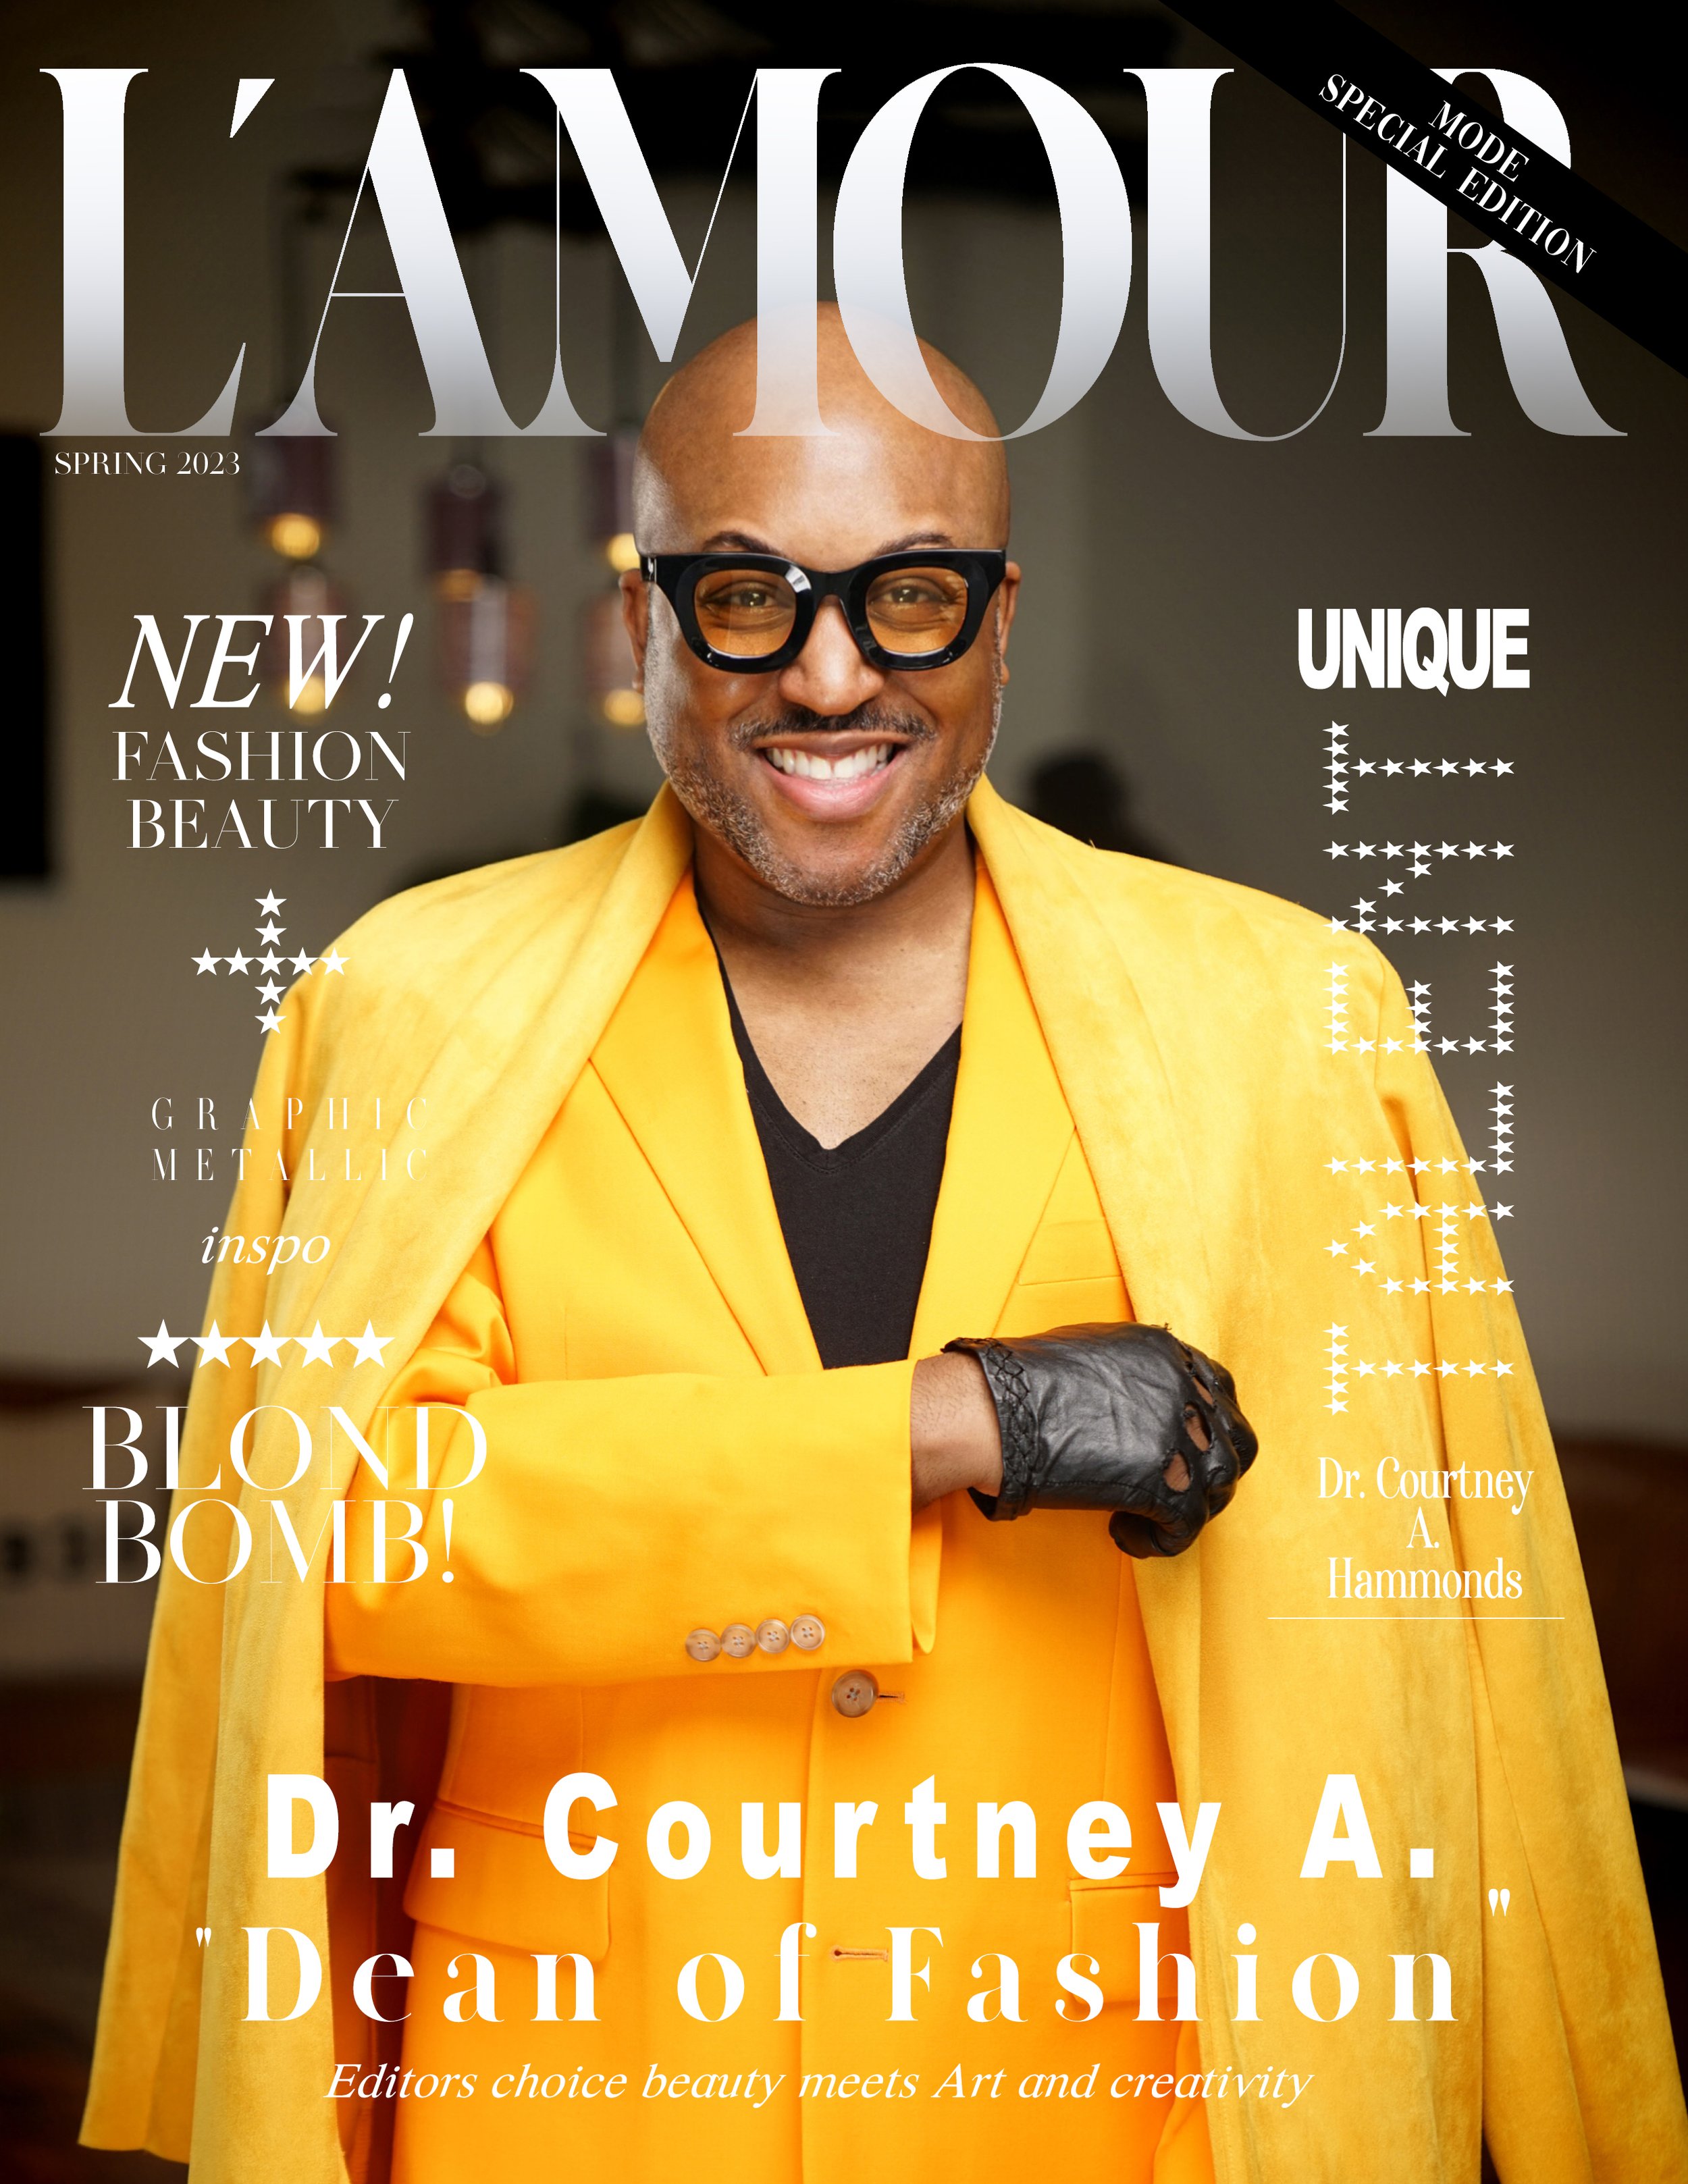 Cover_Dr. Courtney A. Hammonds.jpg